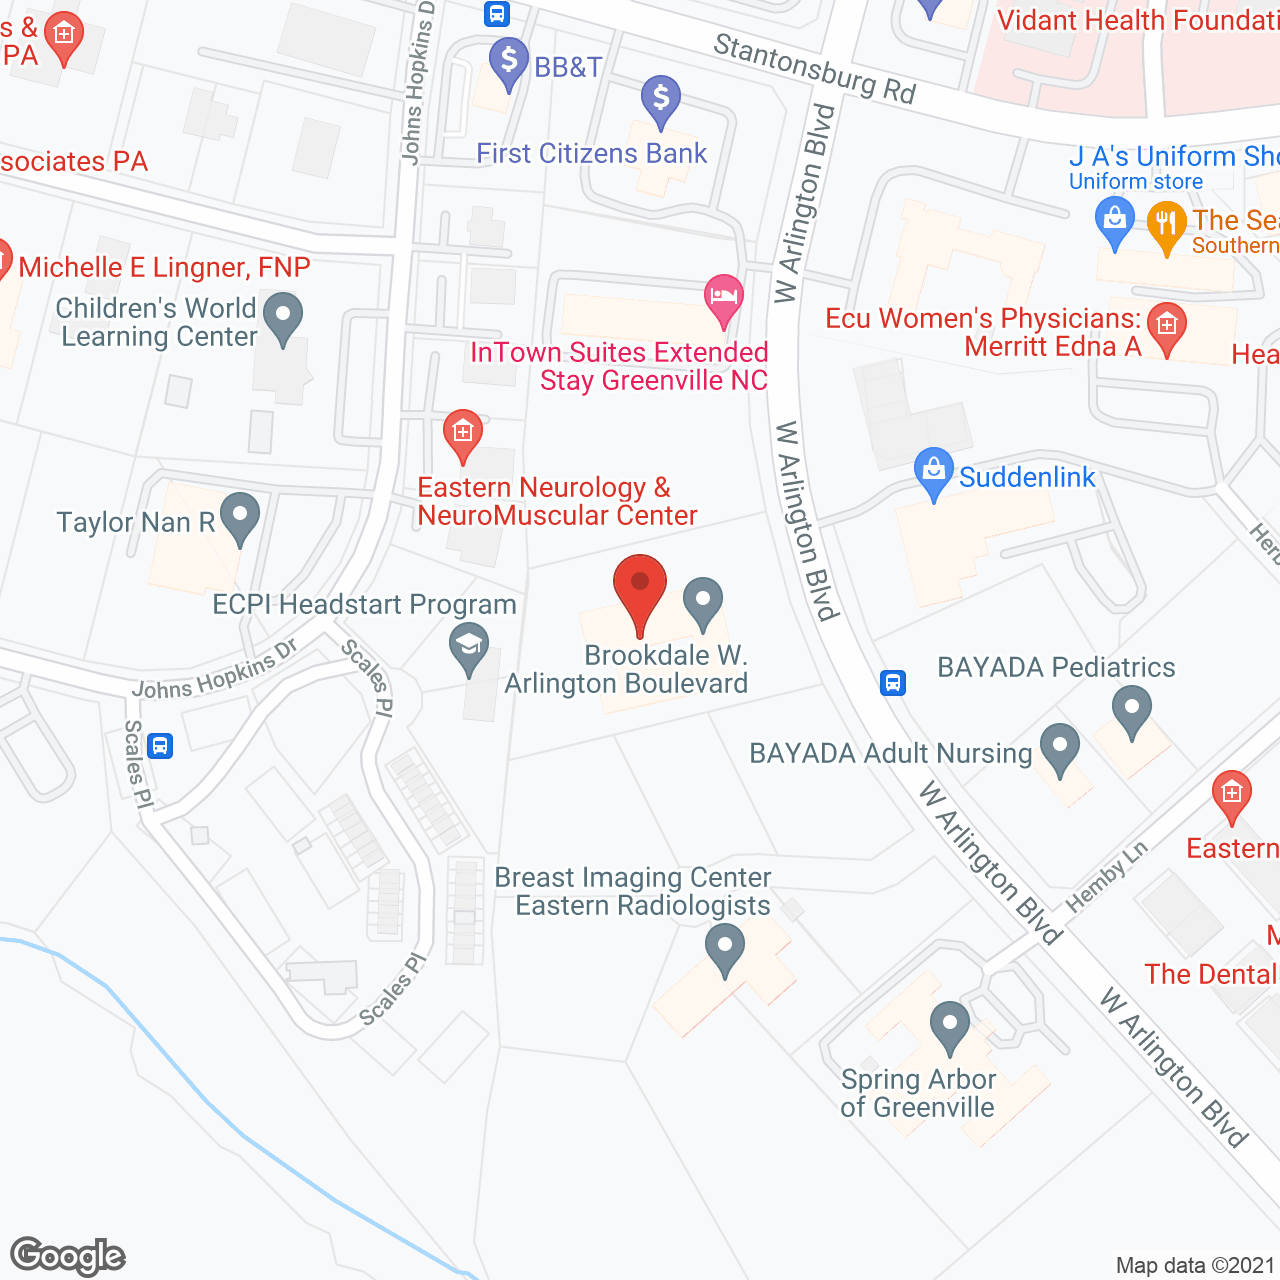 Brookdale W. Arlington Boulevard in google map